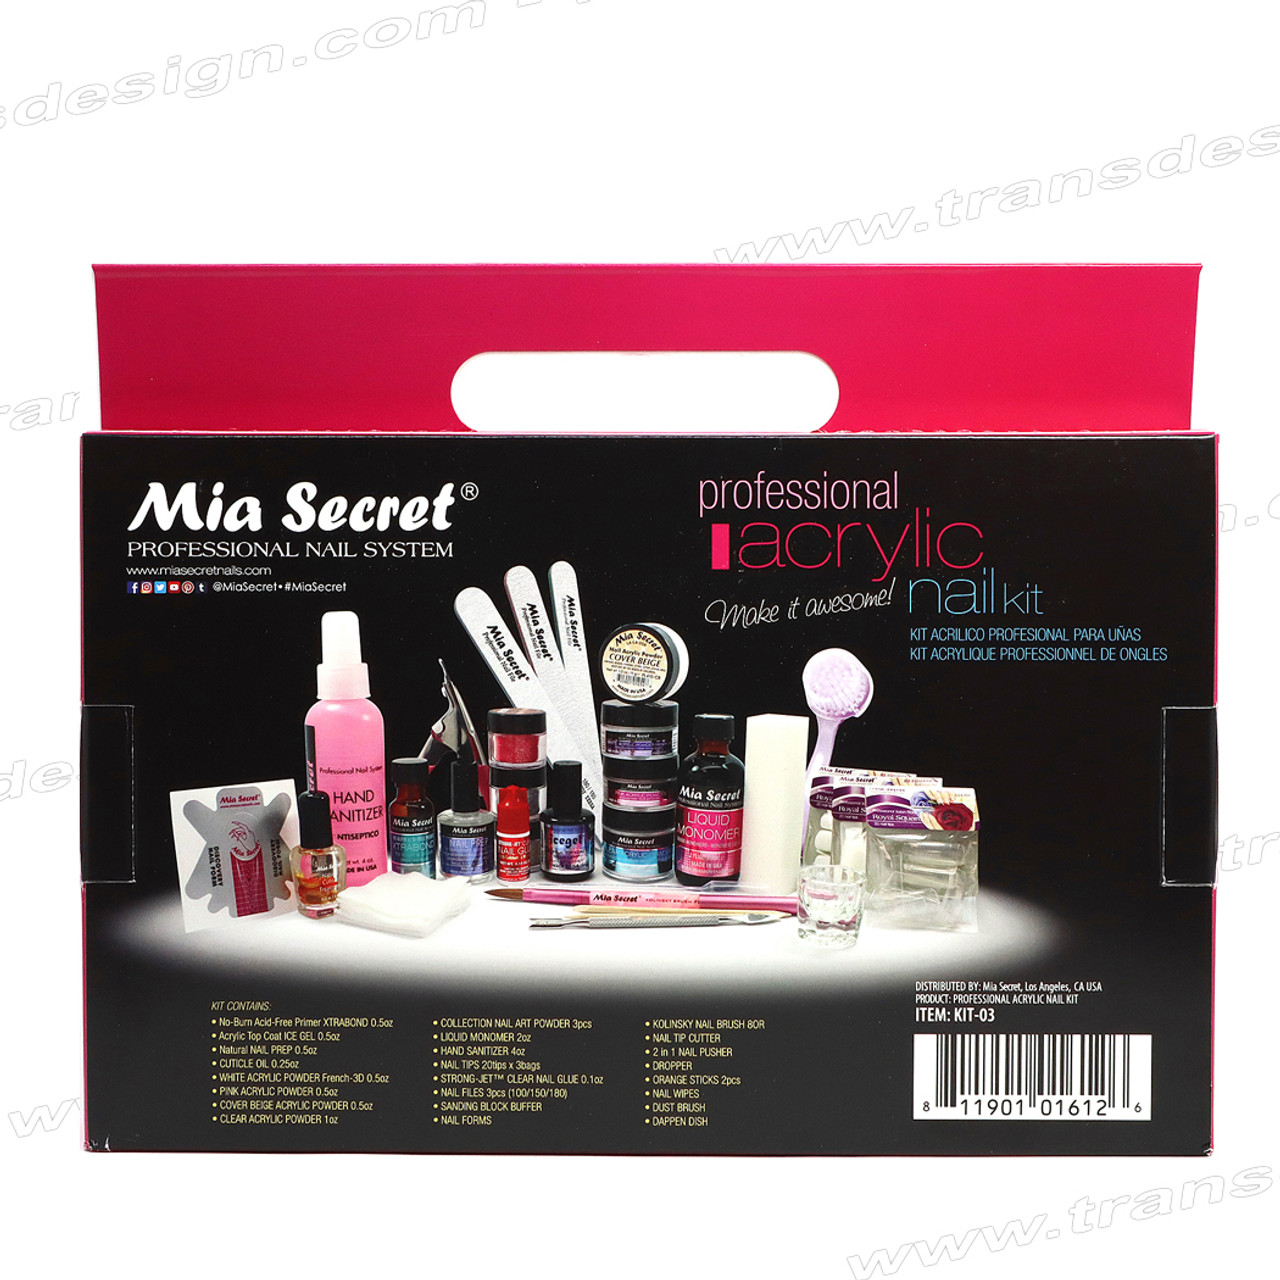 Mia Secret Professional Acrylic Nail Kit/Set For Beginner - Nail kit with  everything - Kit de uñas acrilicas completo mia secret - Kit para uñas de